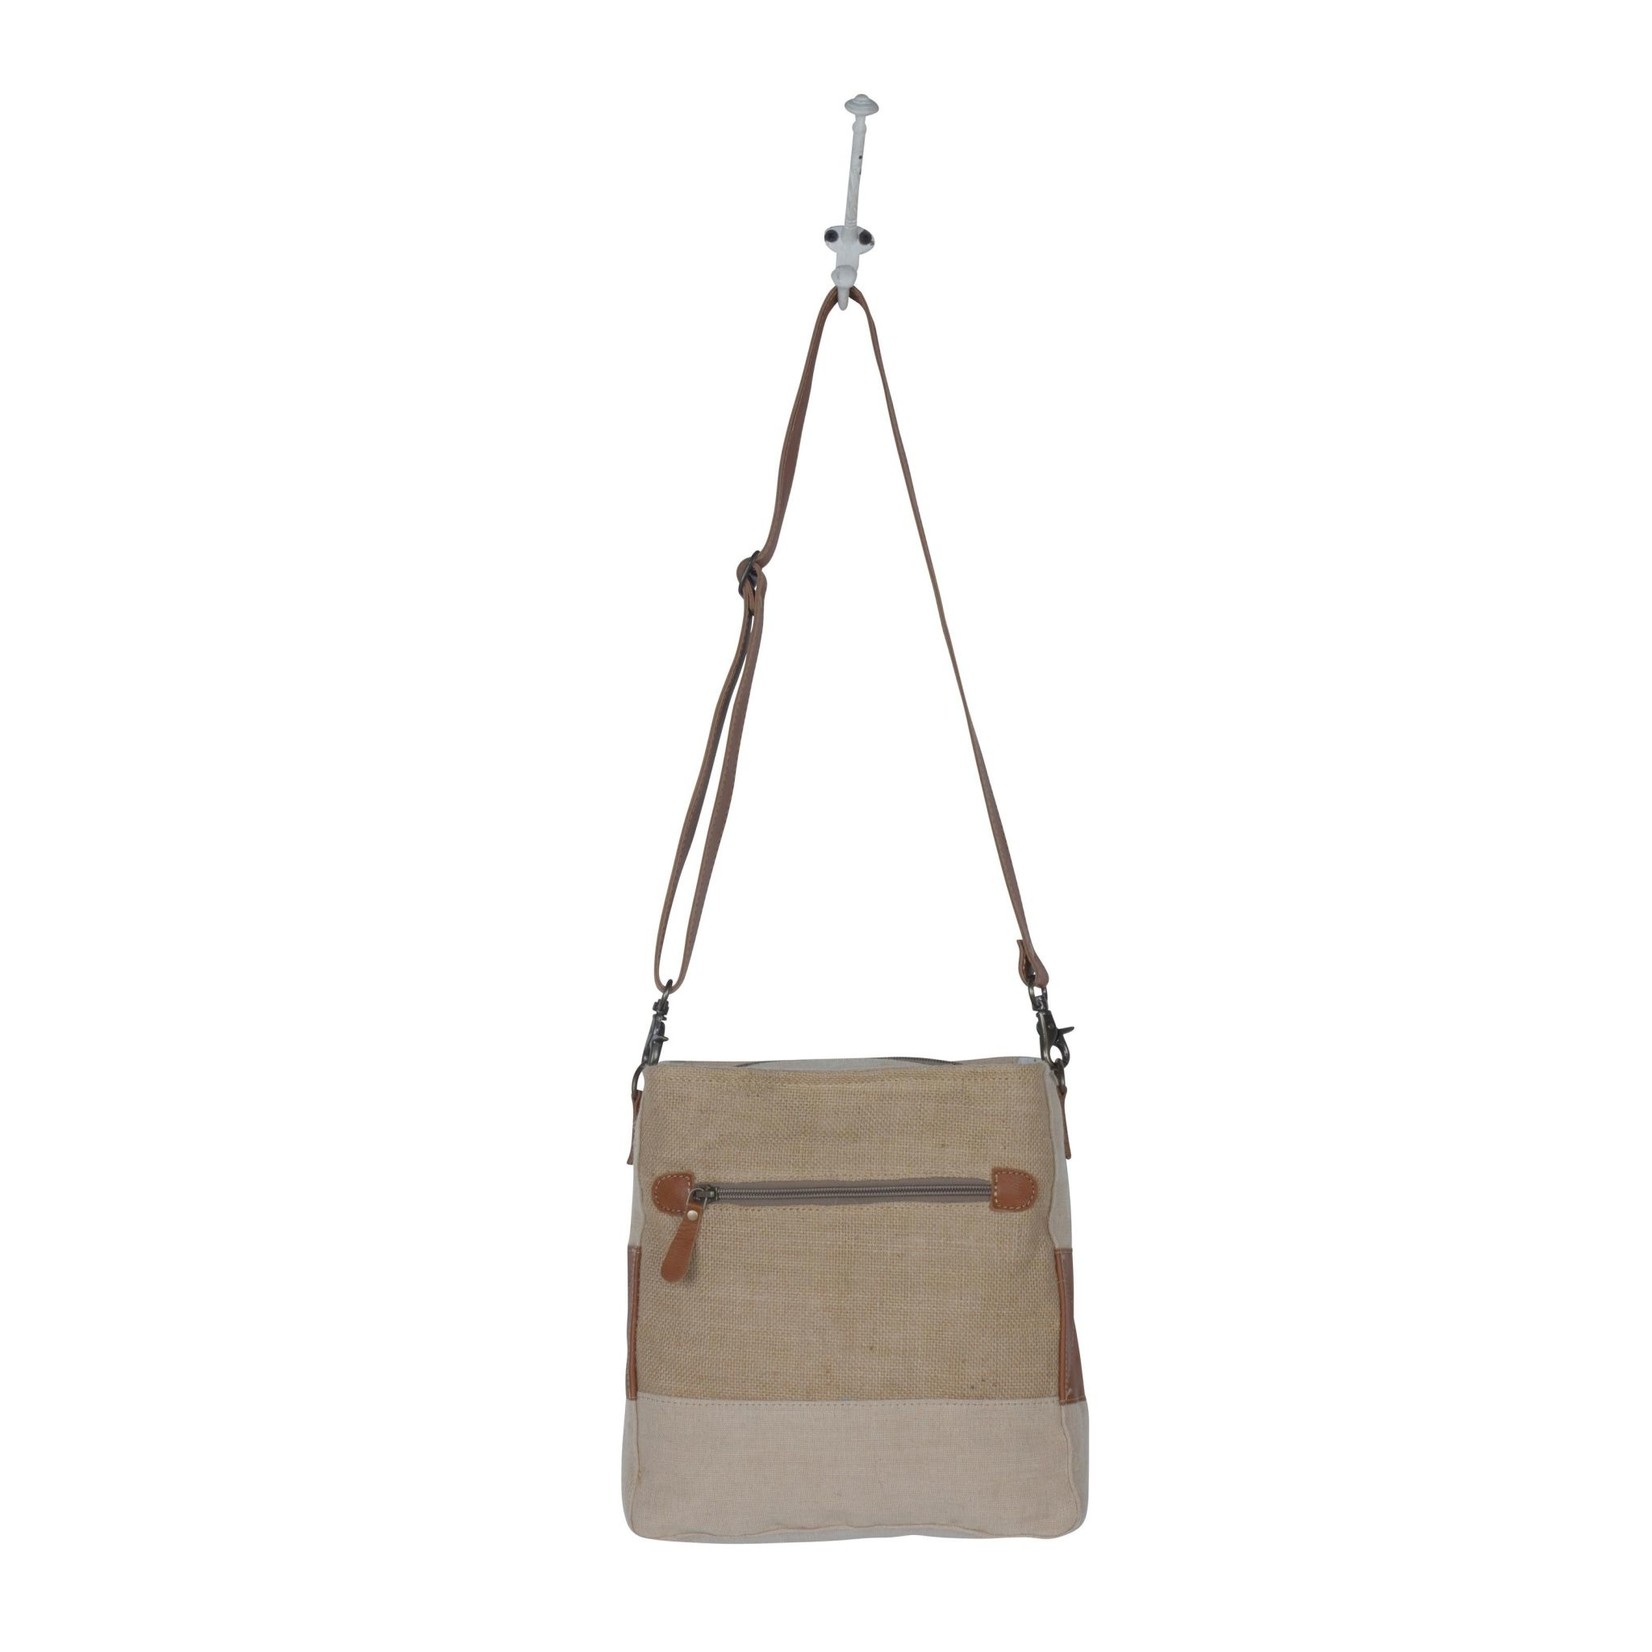 Myra Bags S-3960 Oaken Market Bag